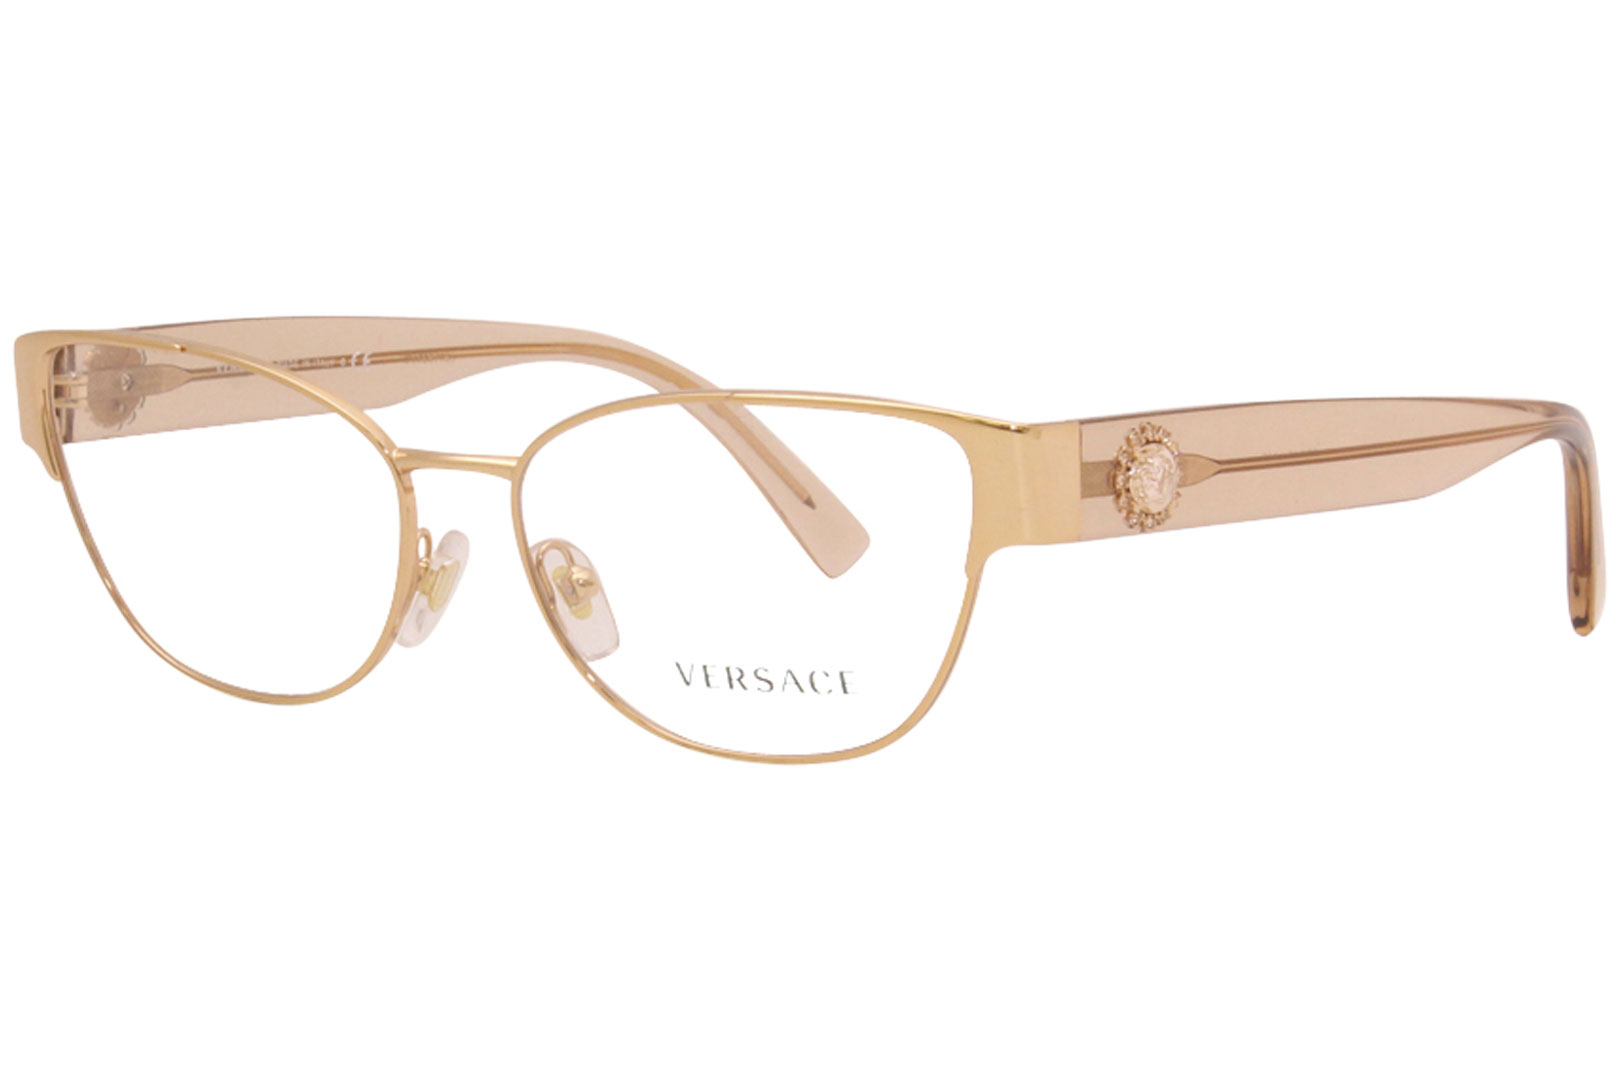 Versace Eyeglasses Frame Women S 1267 B 1412 Pink Gold 53 15 140